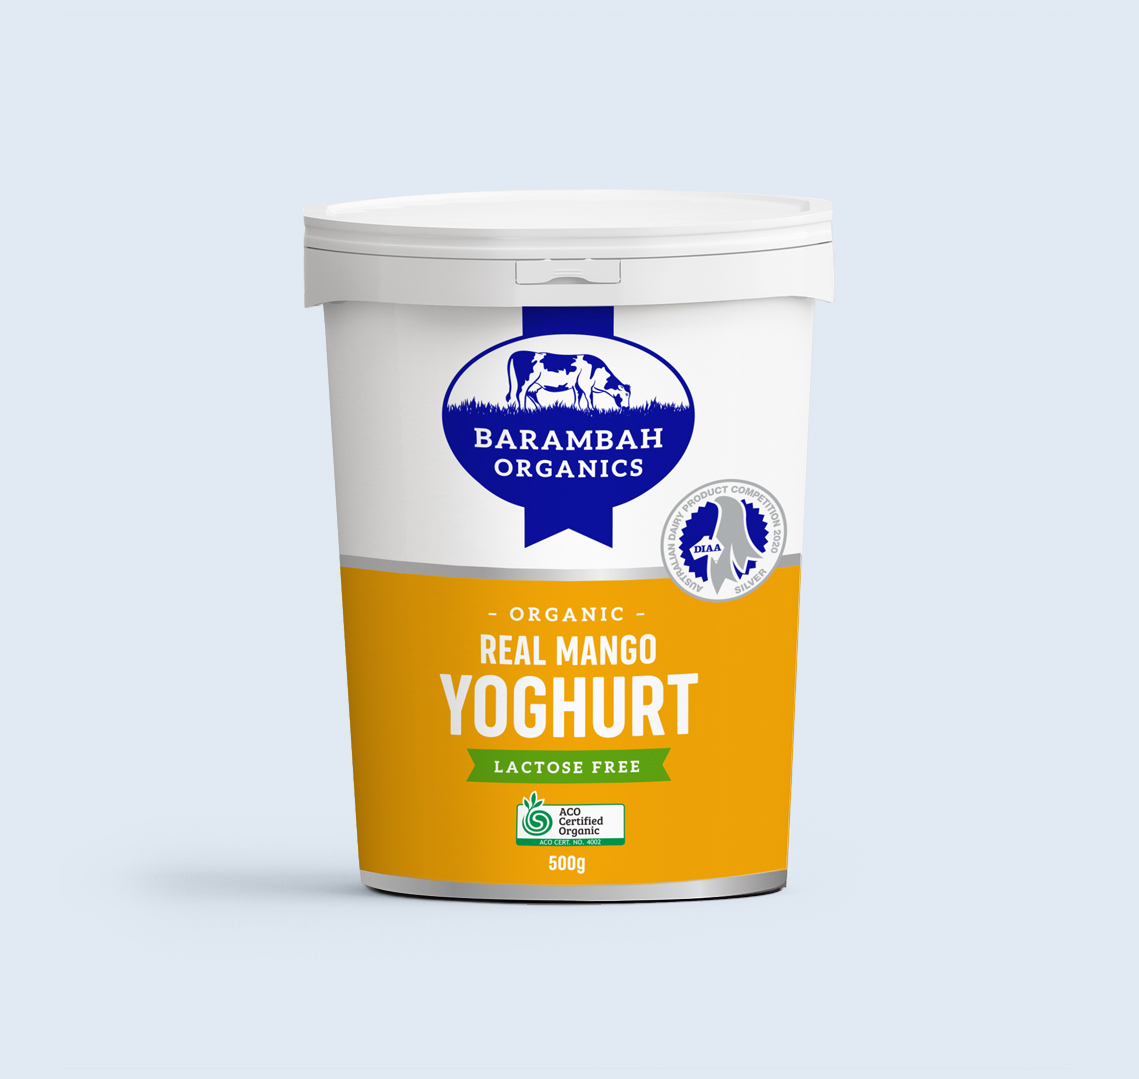 500g of Real Mango Yoghurt - organic natural yoghurt - Barambah Organics